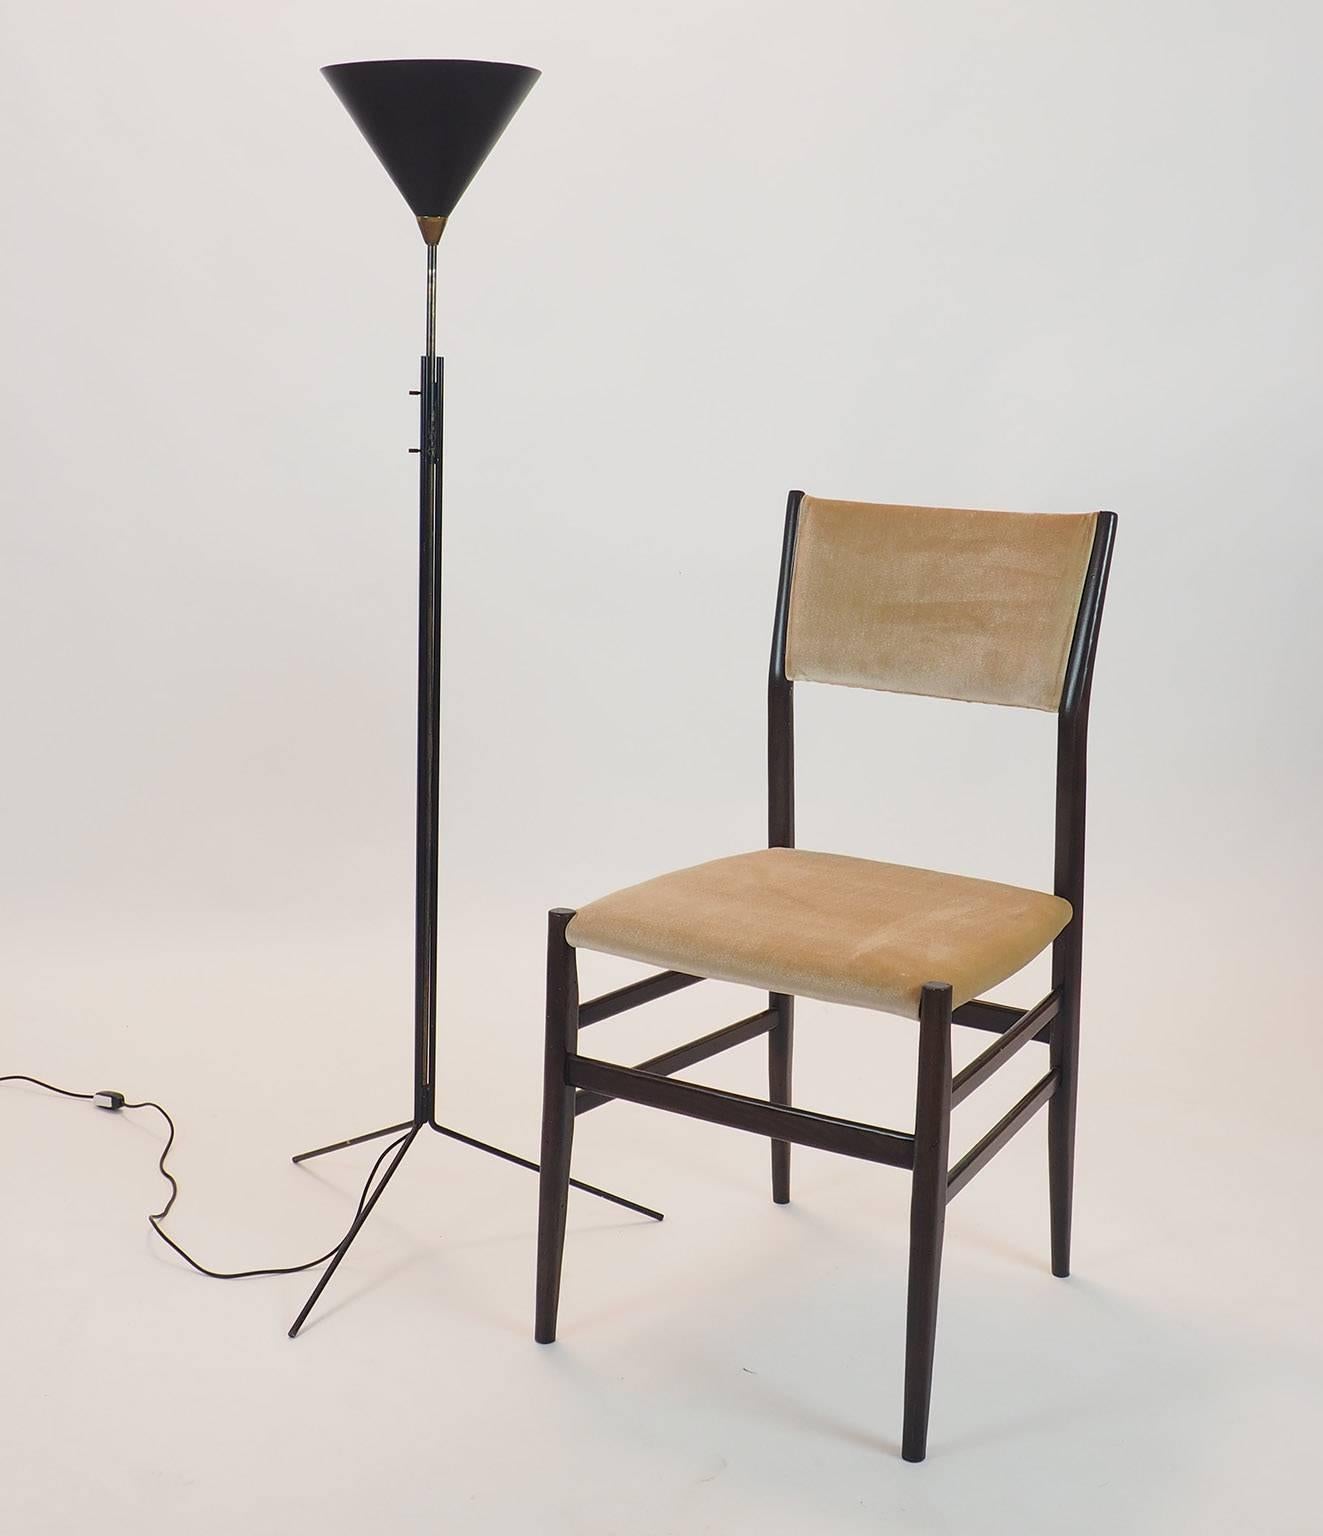 Italian Tito Agnoli Adjustable Floor Lamp with Black Conic Reflector, Milano, 1950s For Sale